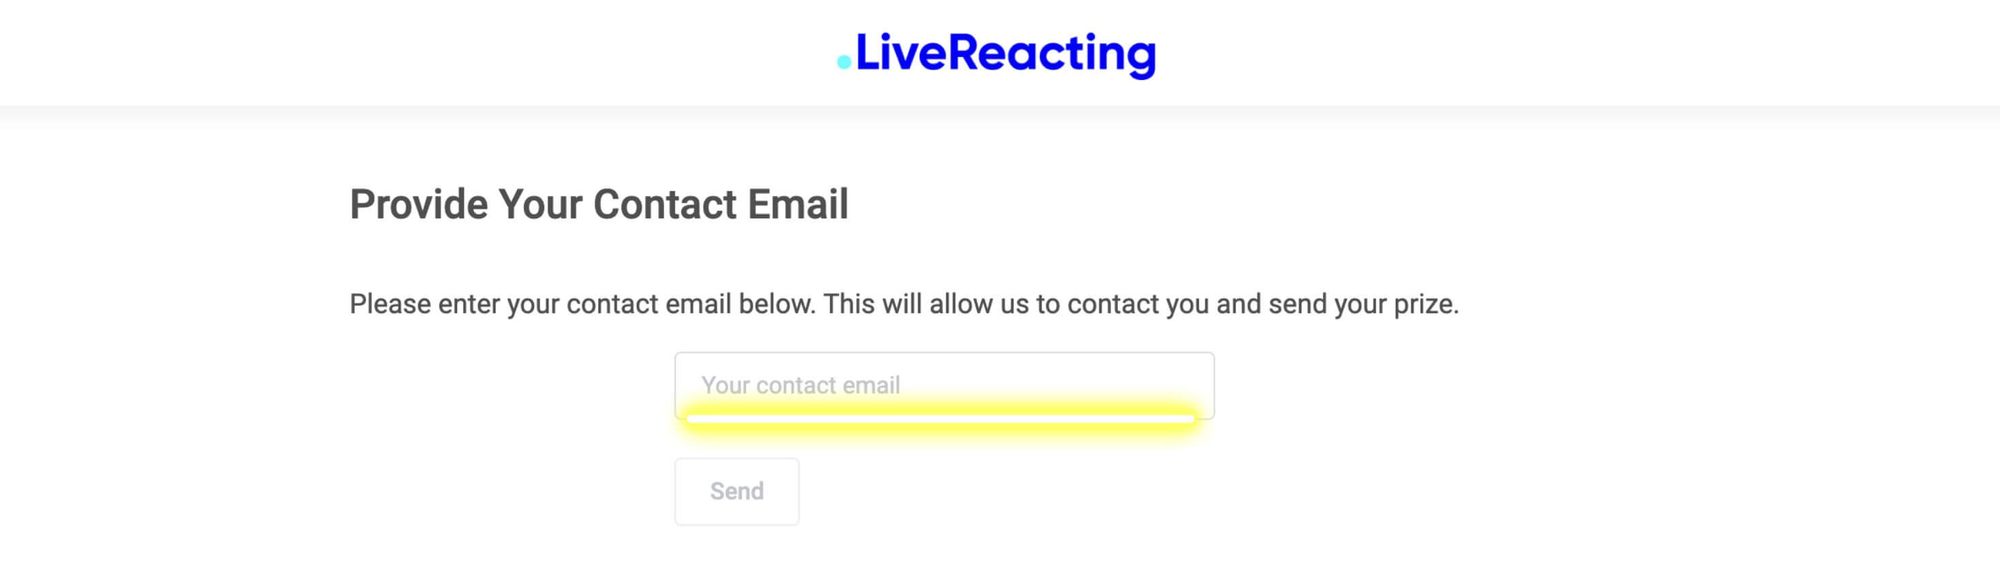 Winner Verification Process: Leave email address